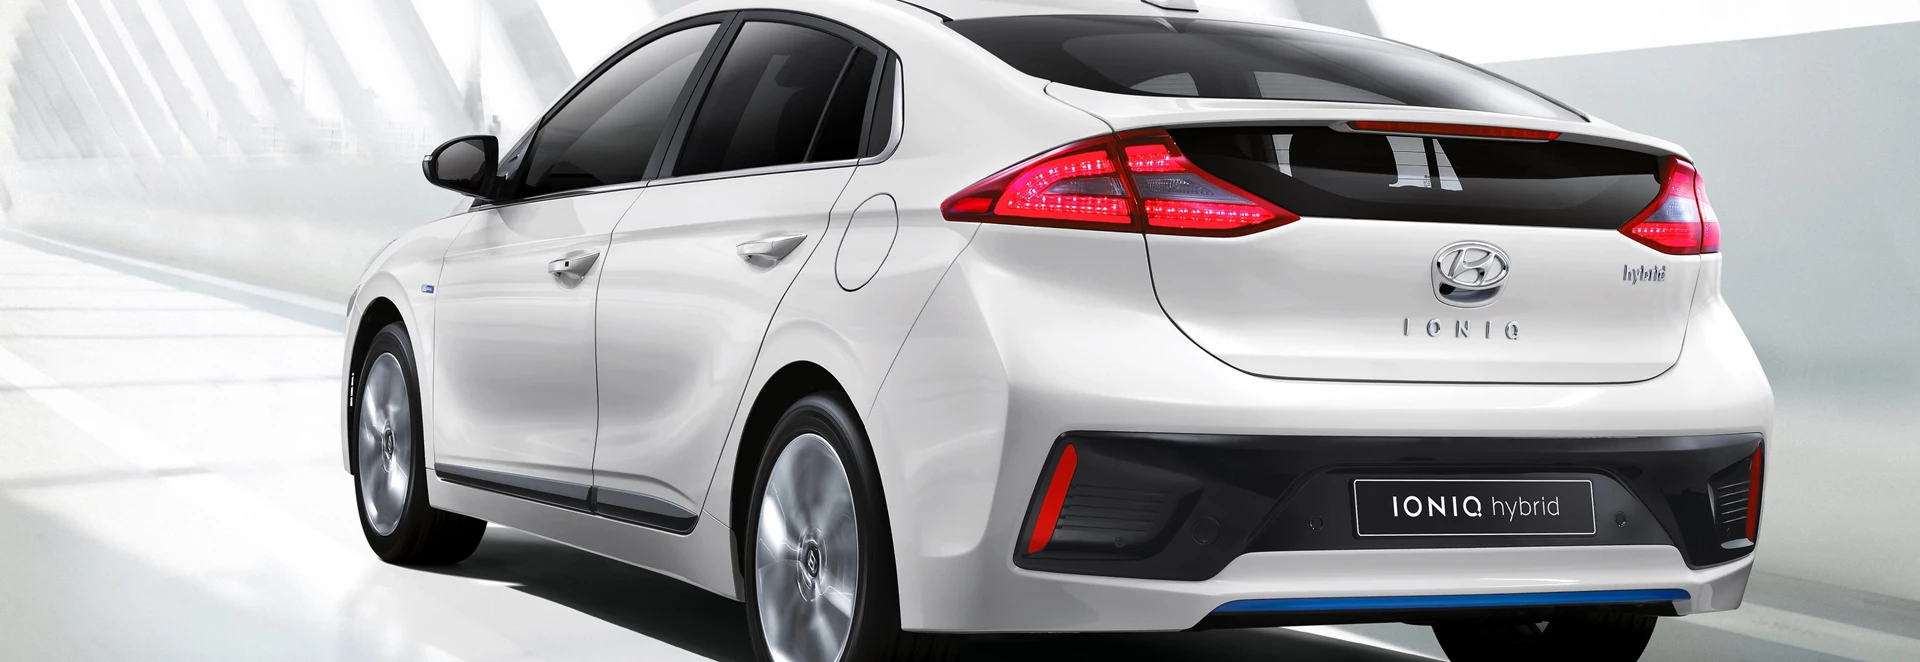 All-new Hyundai Ioniq to rival hybrids and EVs